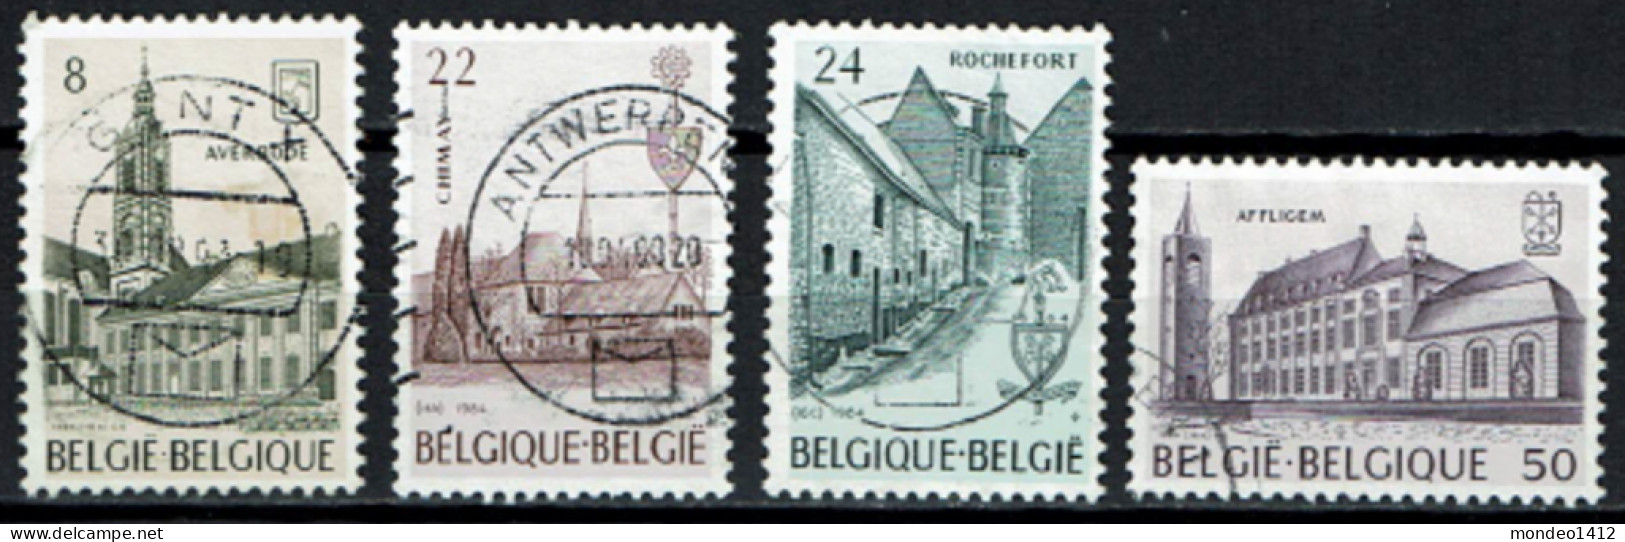 België 1984 OBP 2146/2149 - Y&T 2146/49 - Abdijen, Abbayes, Abbeys - Averbode, Chimay, Rochefort, Affligem - Usati